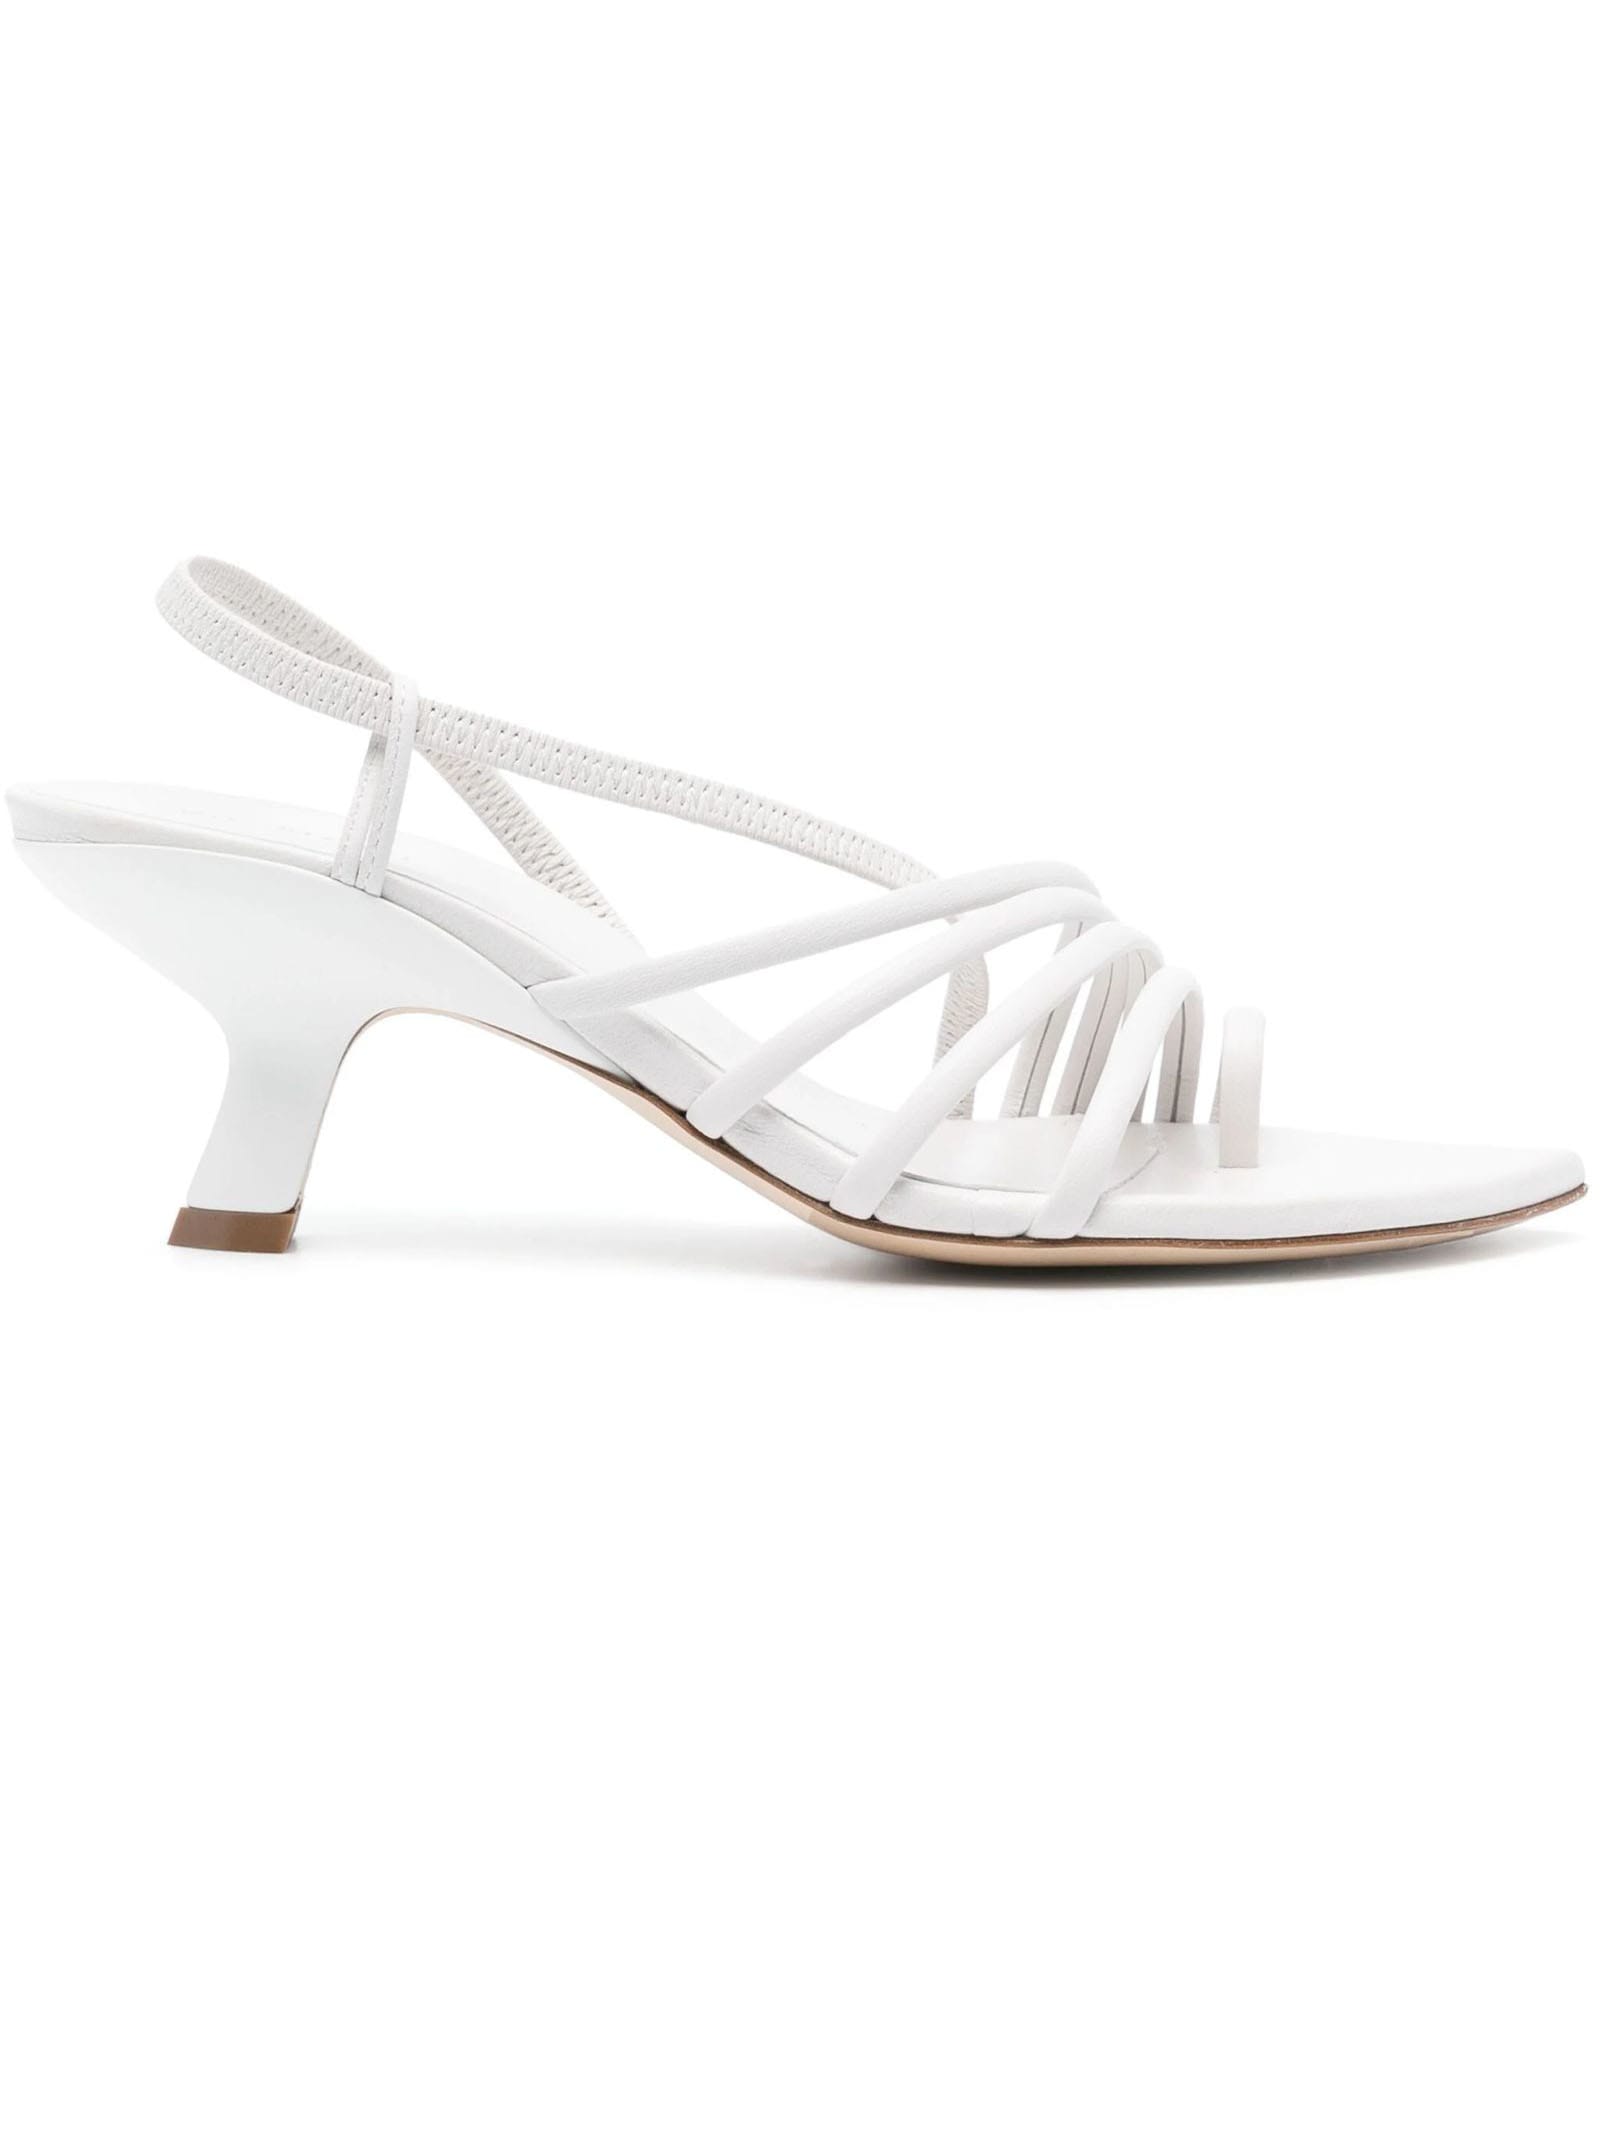 Vic Matié Slash Sandals In Soft White Nappa